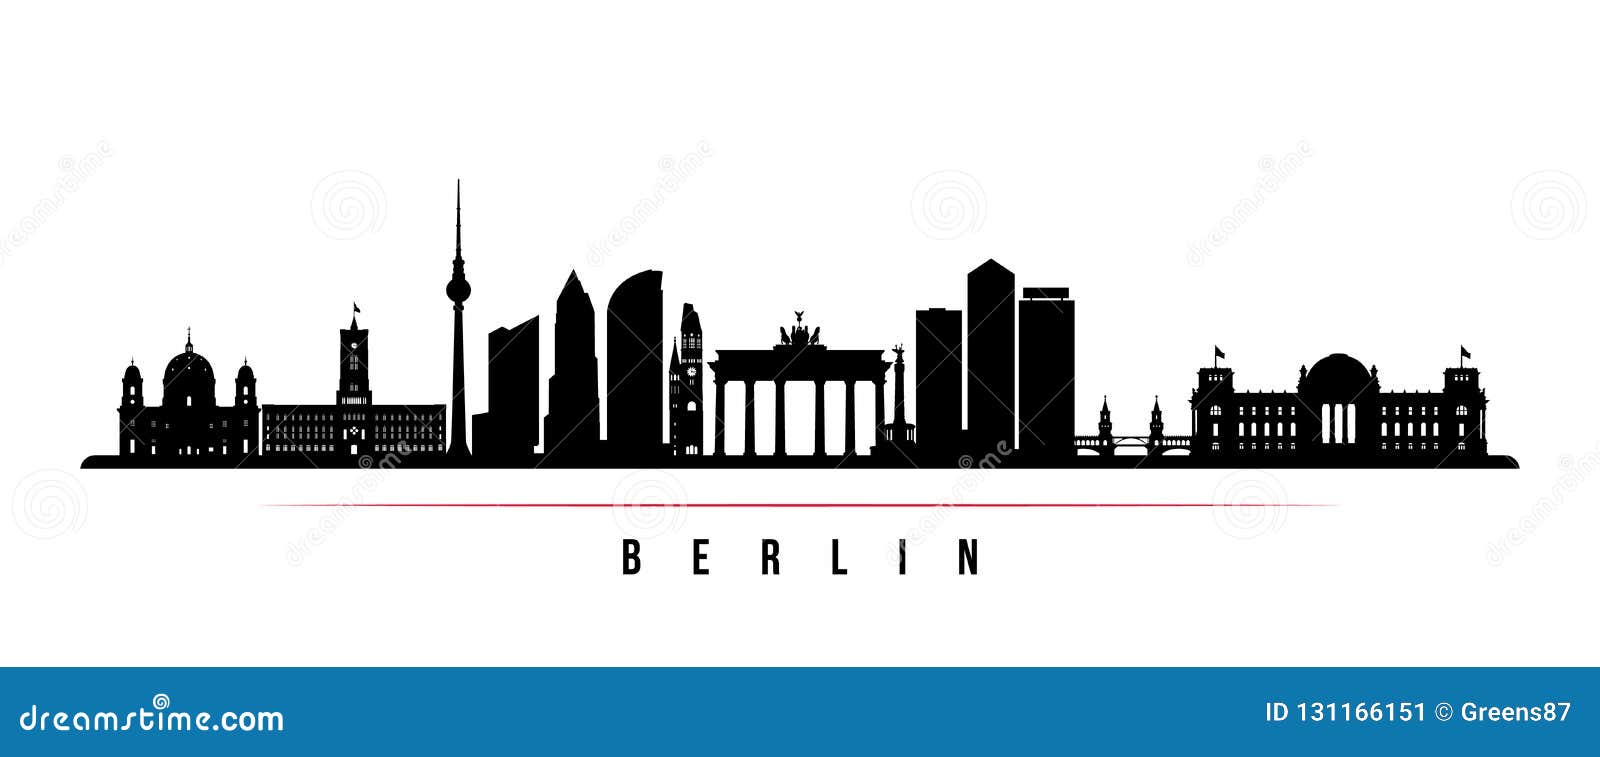 berlin city skyline horizontal banner.